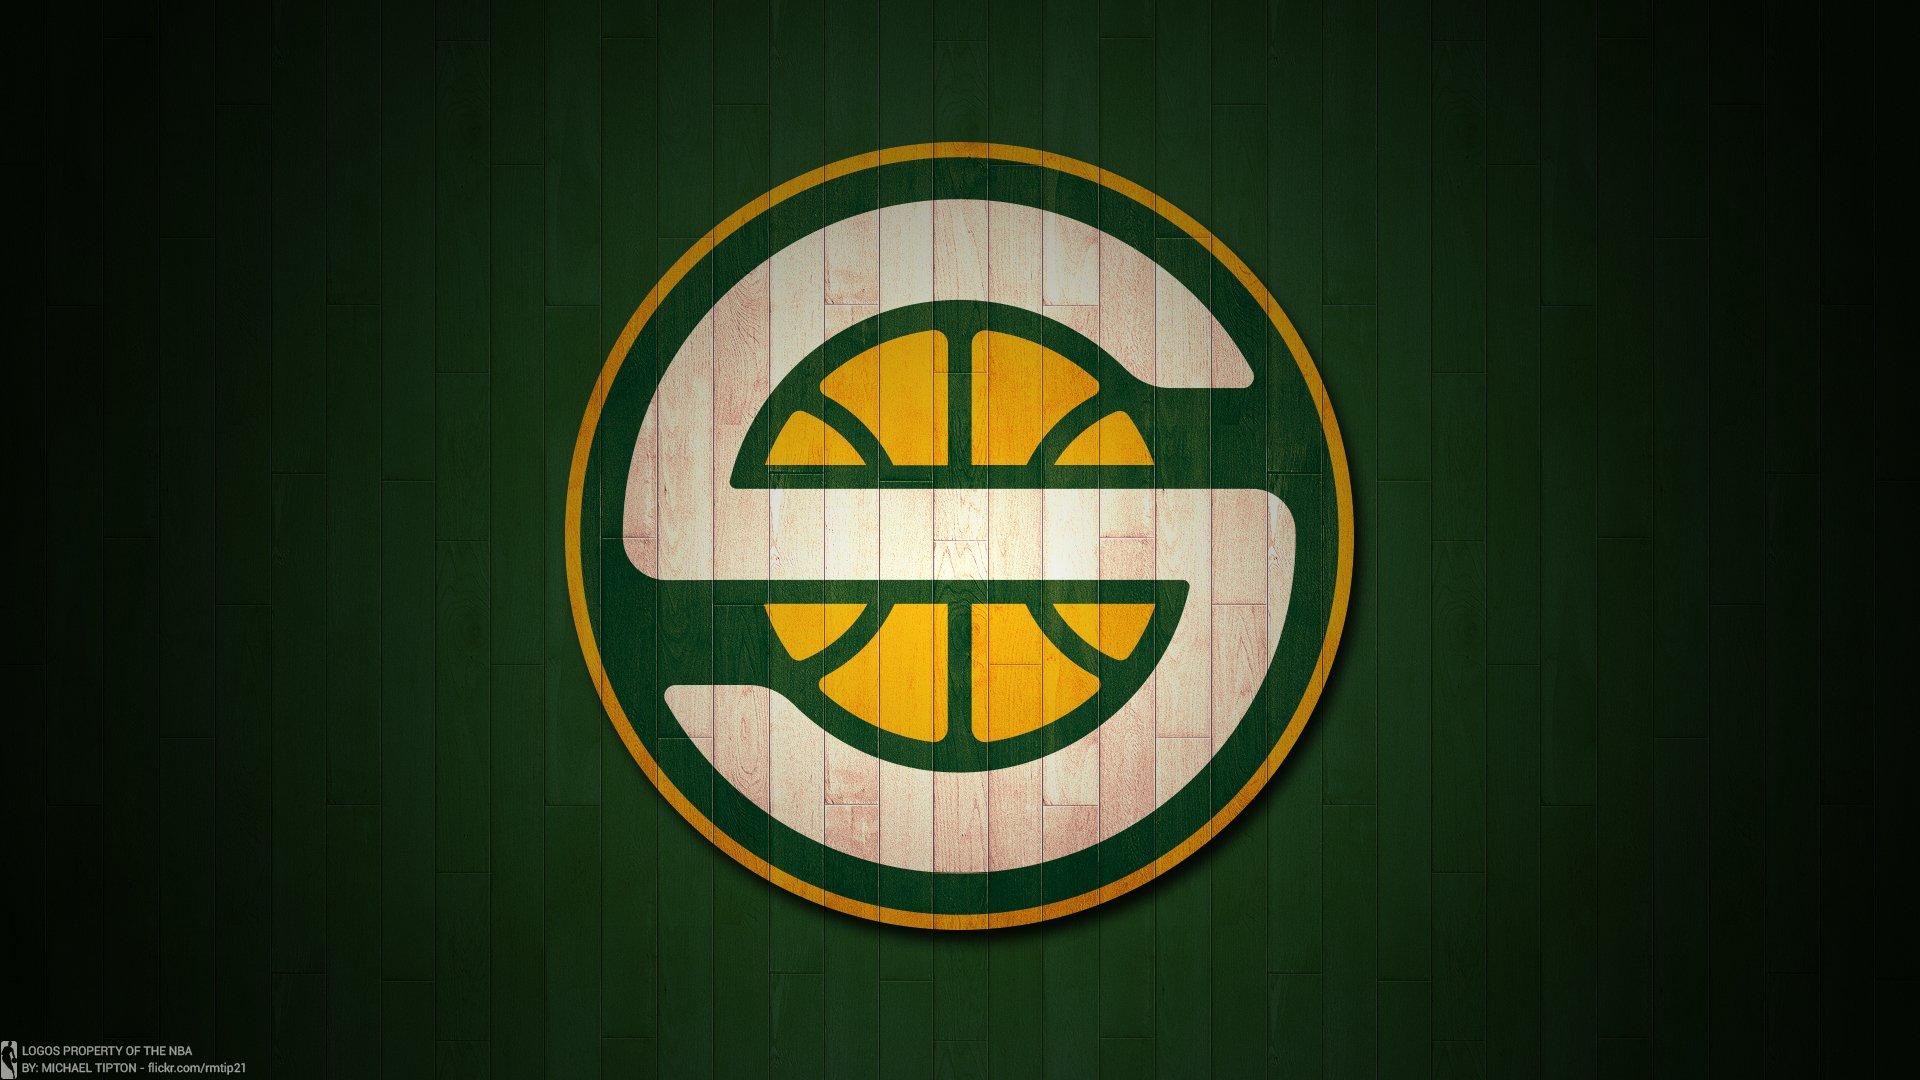 Seattle Supersonics Basketball team HD Wallpaper. Background Image